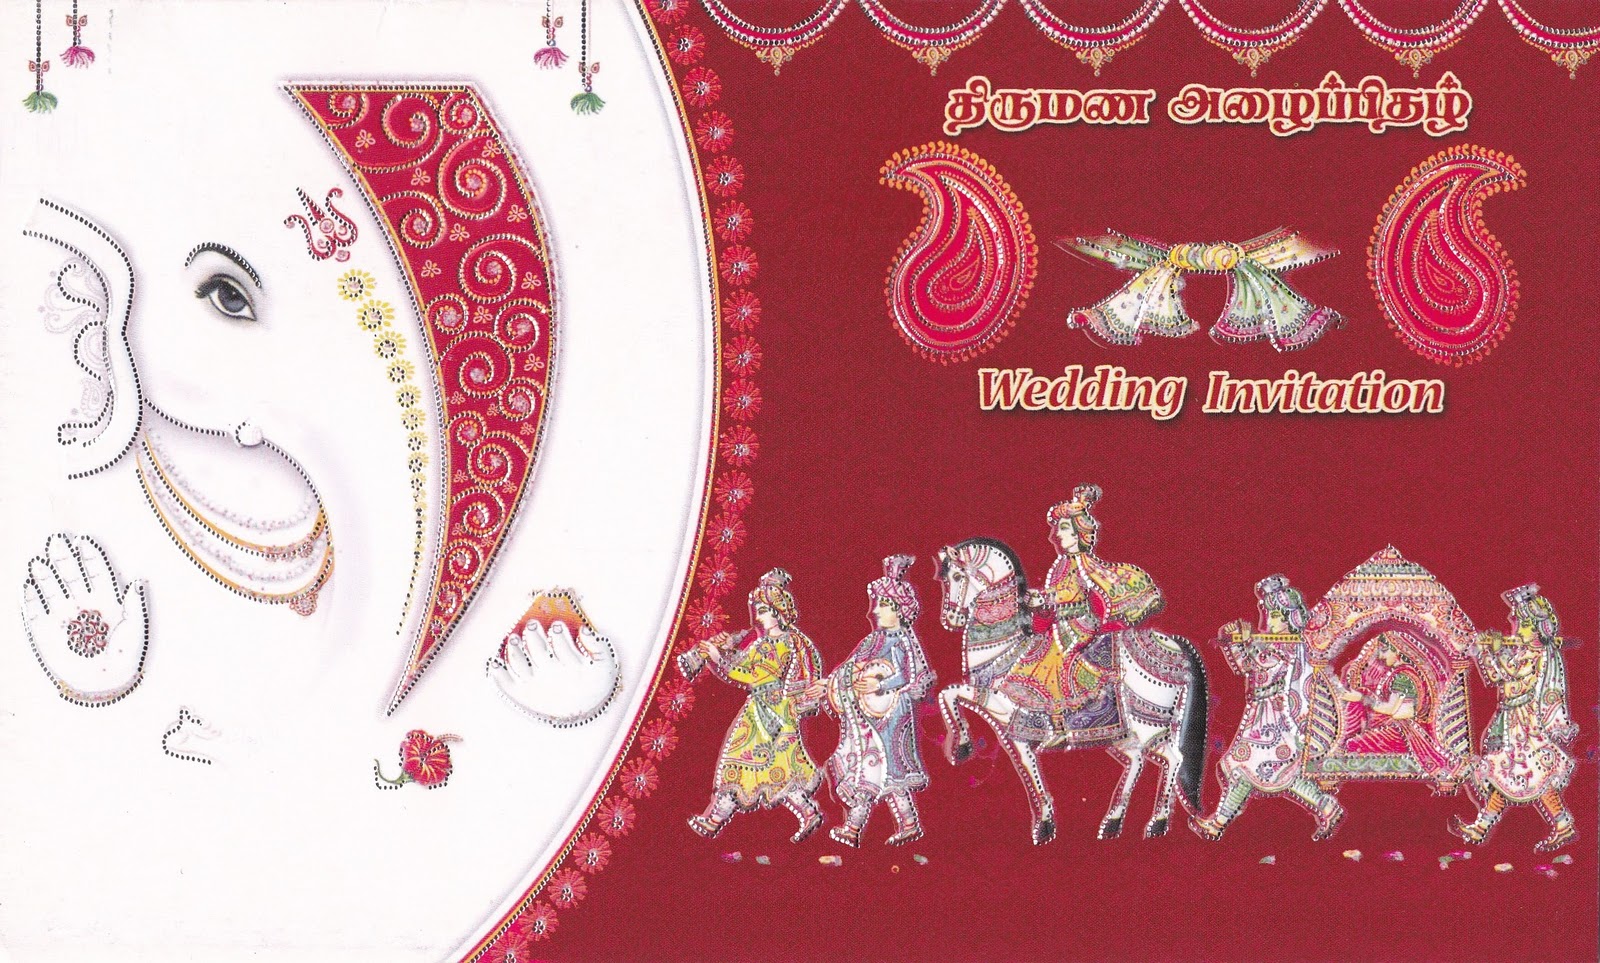 Handmade Wedding Cards - Greetings CardPink & Posh